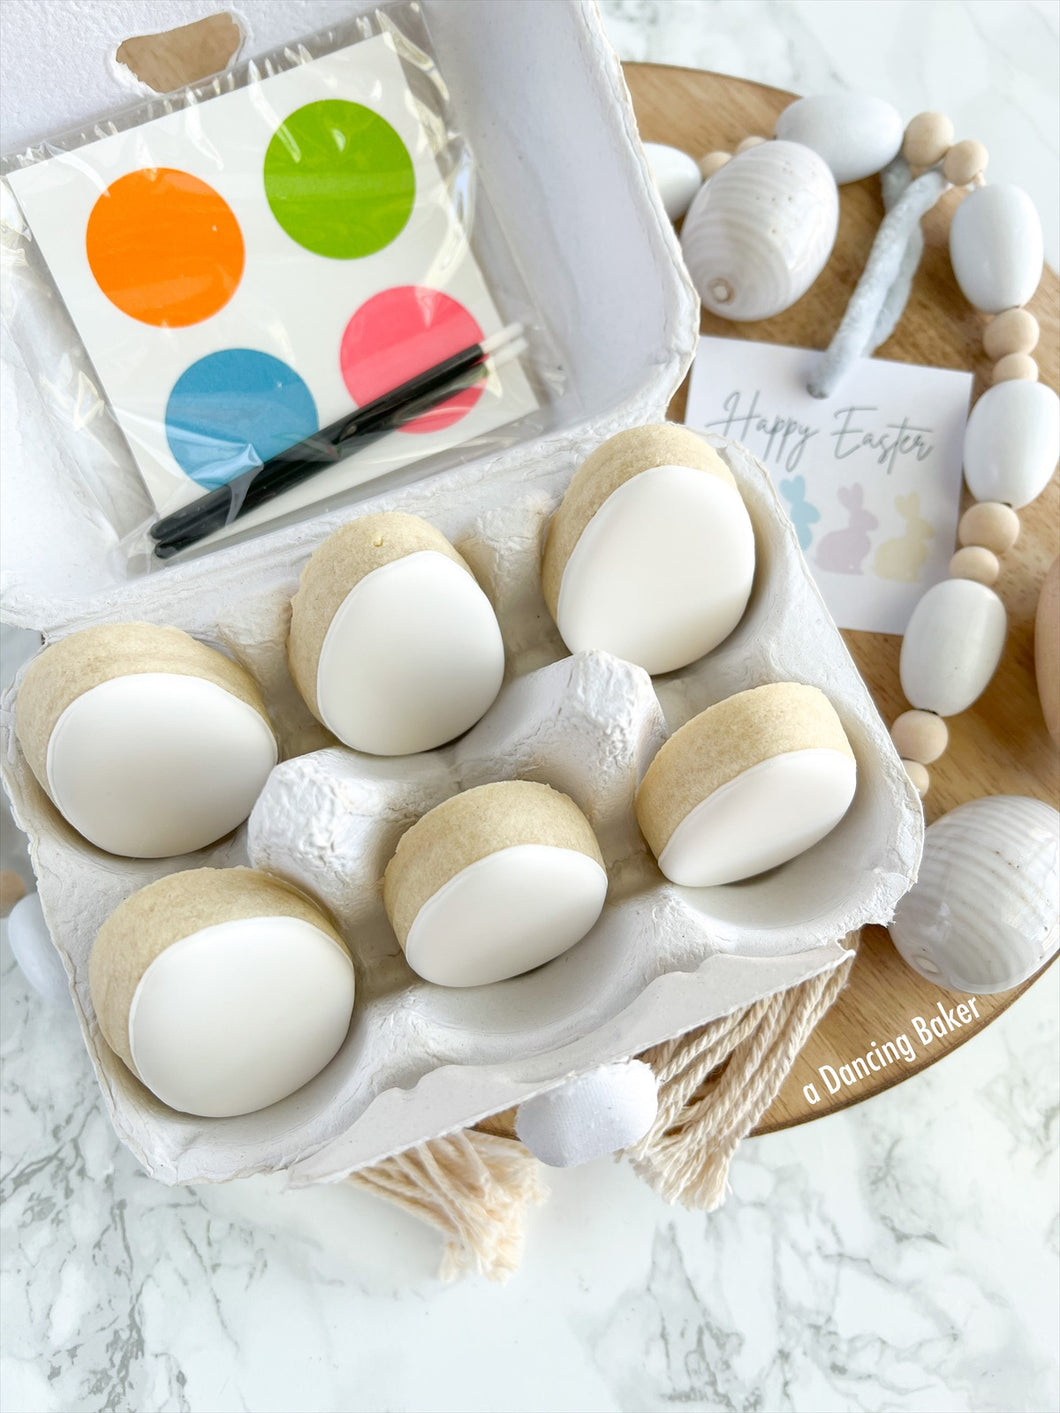 Paint your own mini eggs